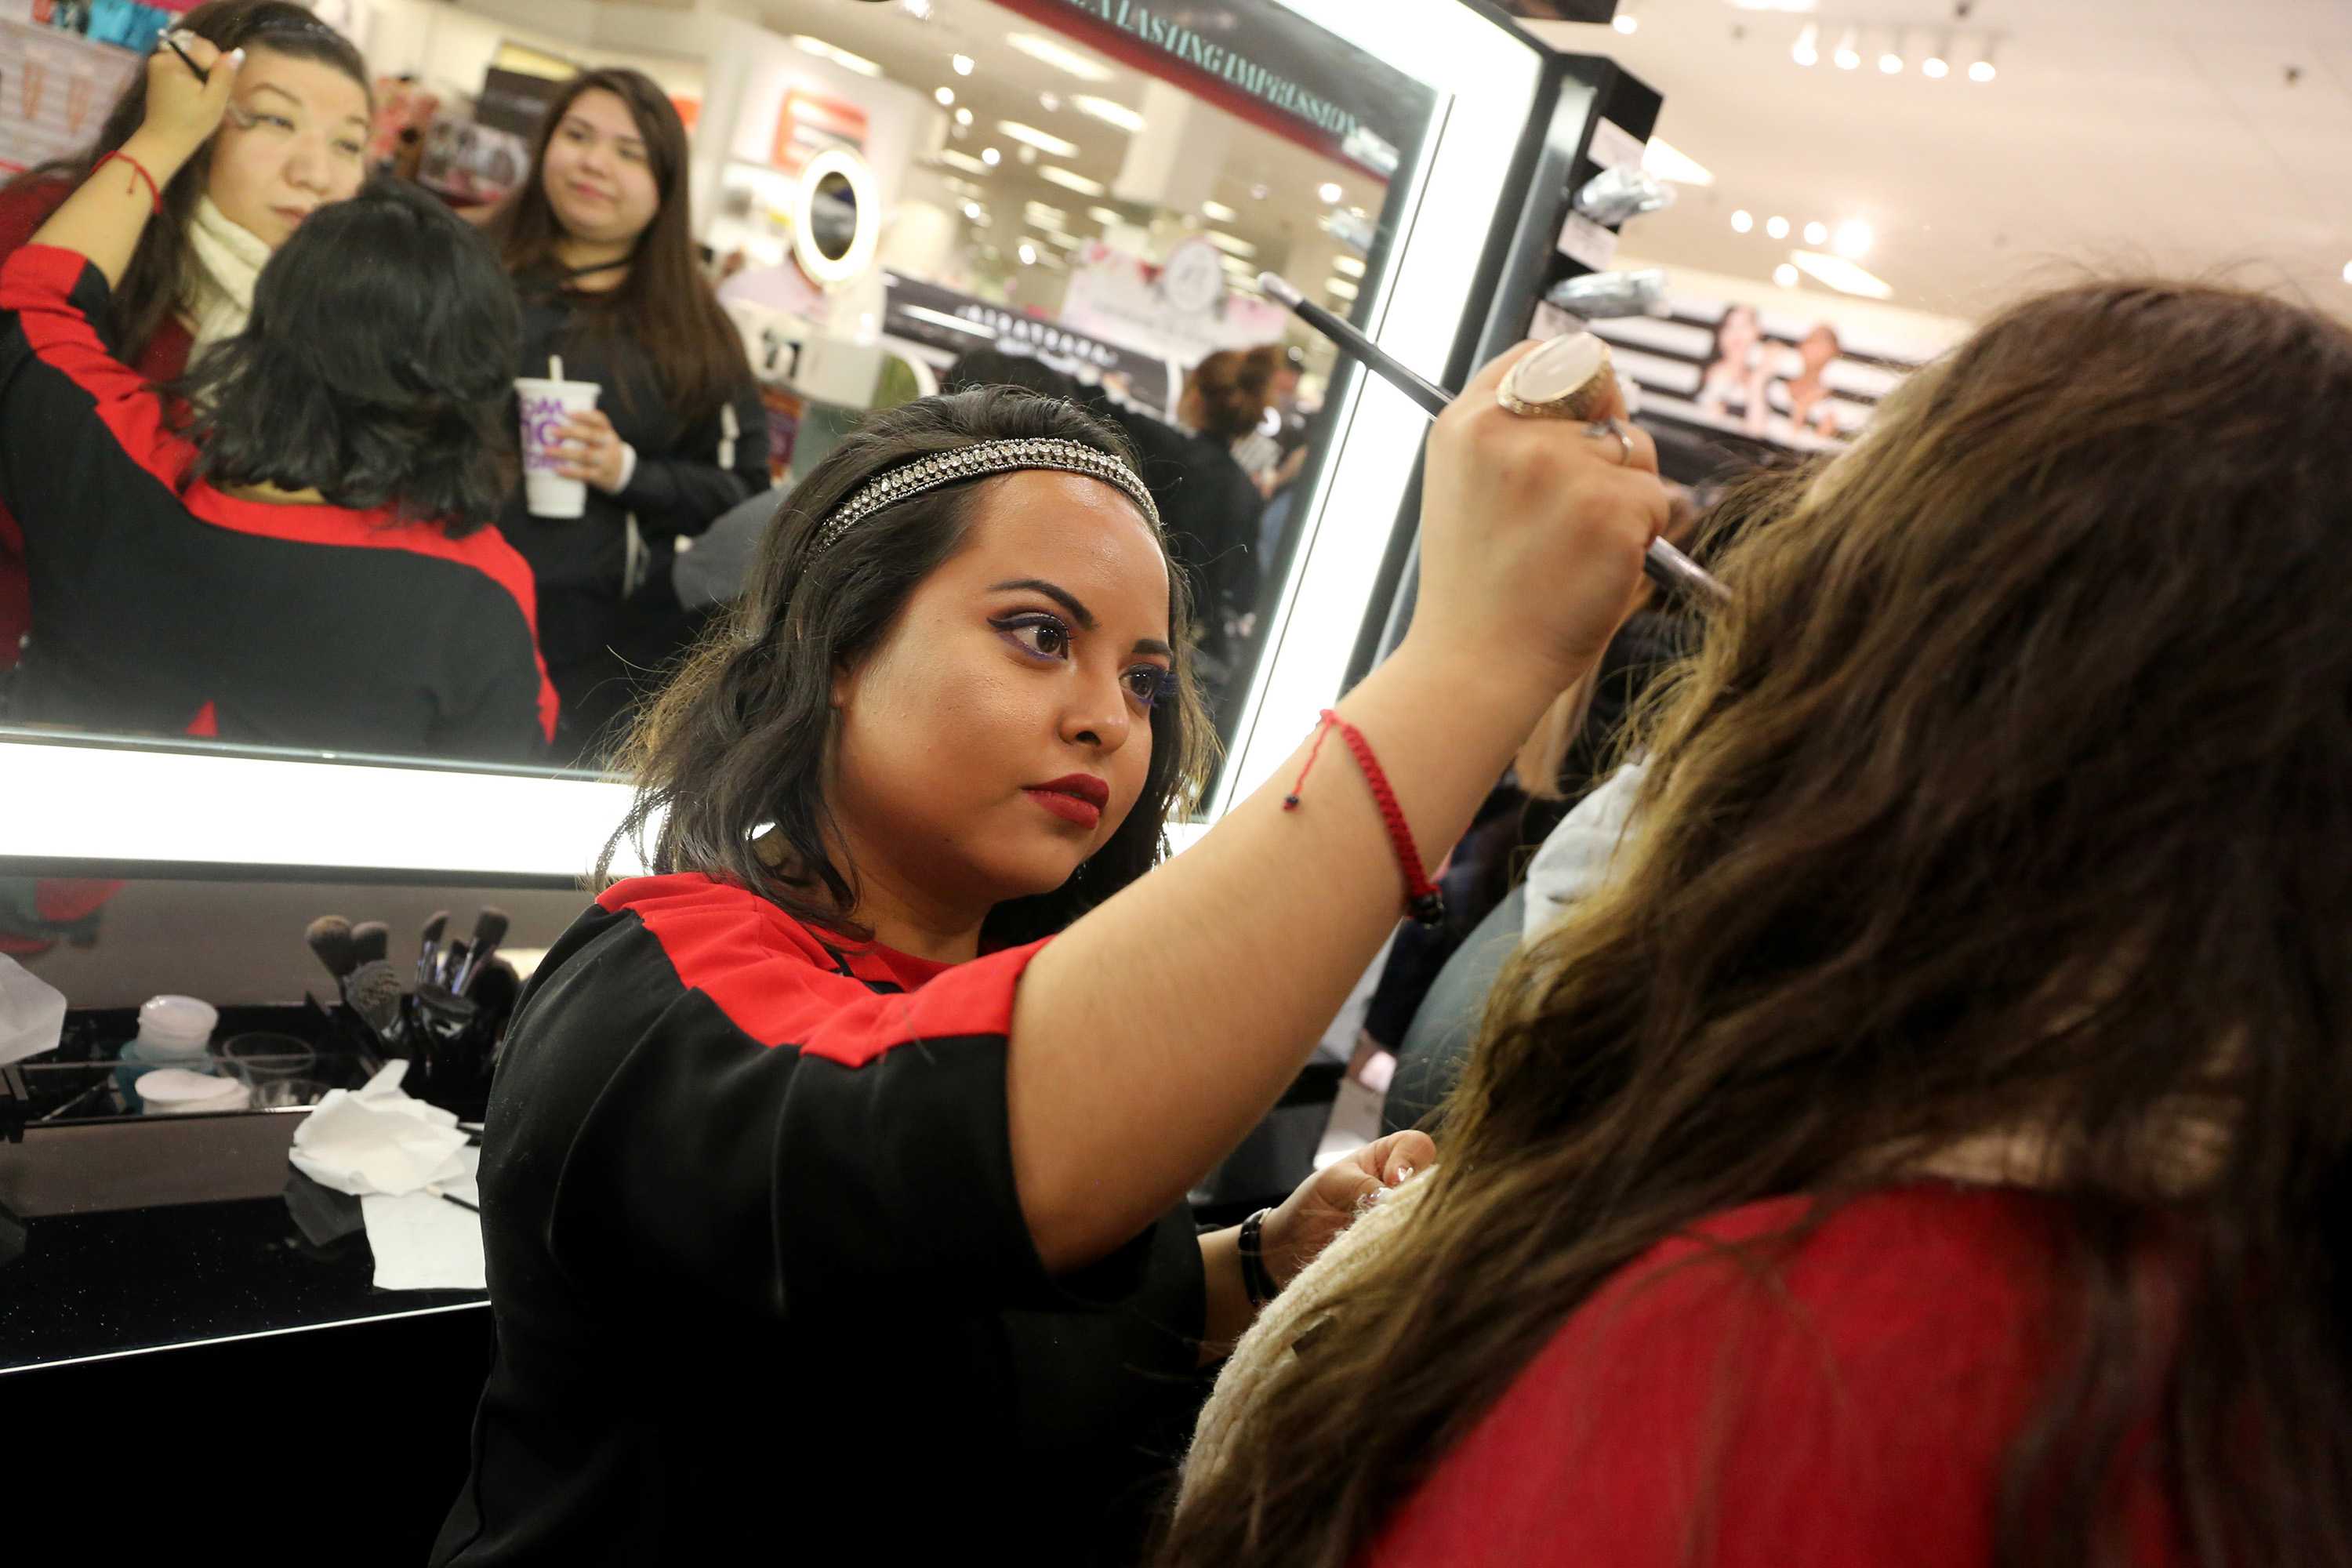 Sephora employee applies makeup on customer